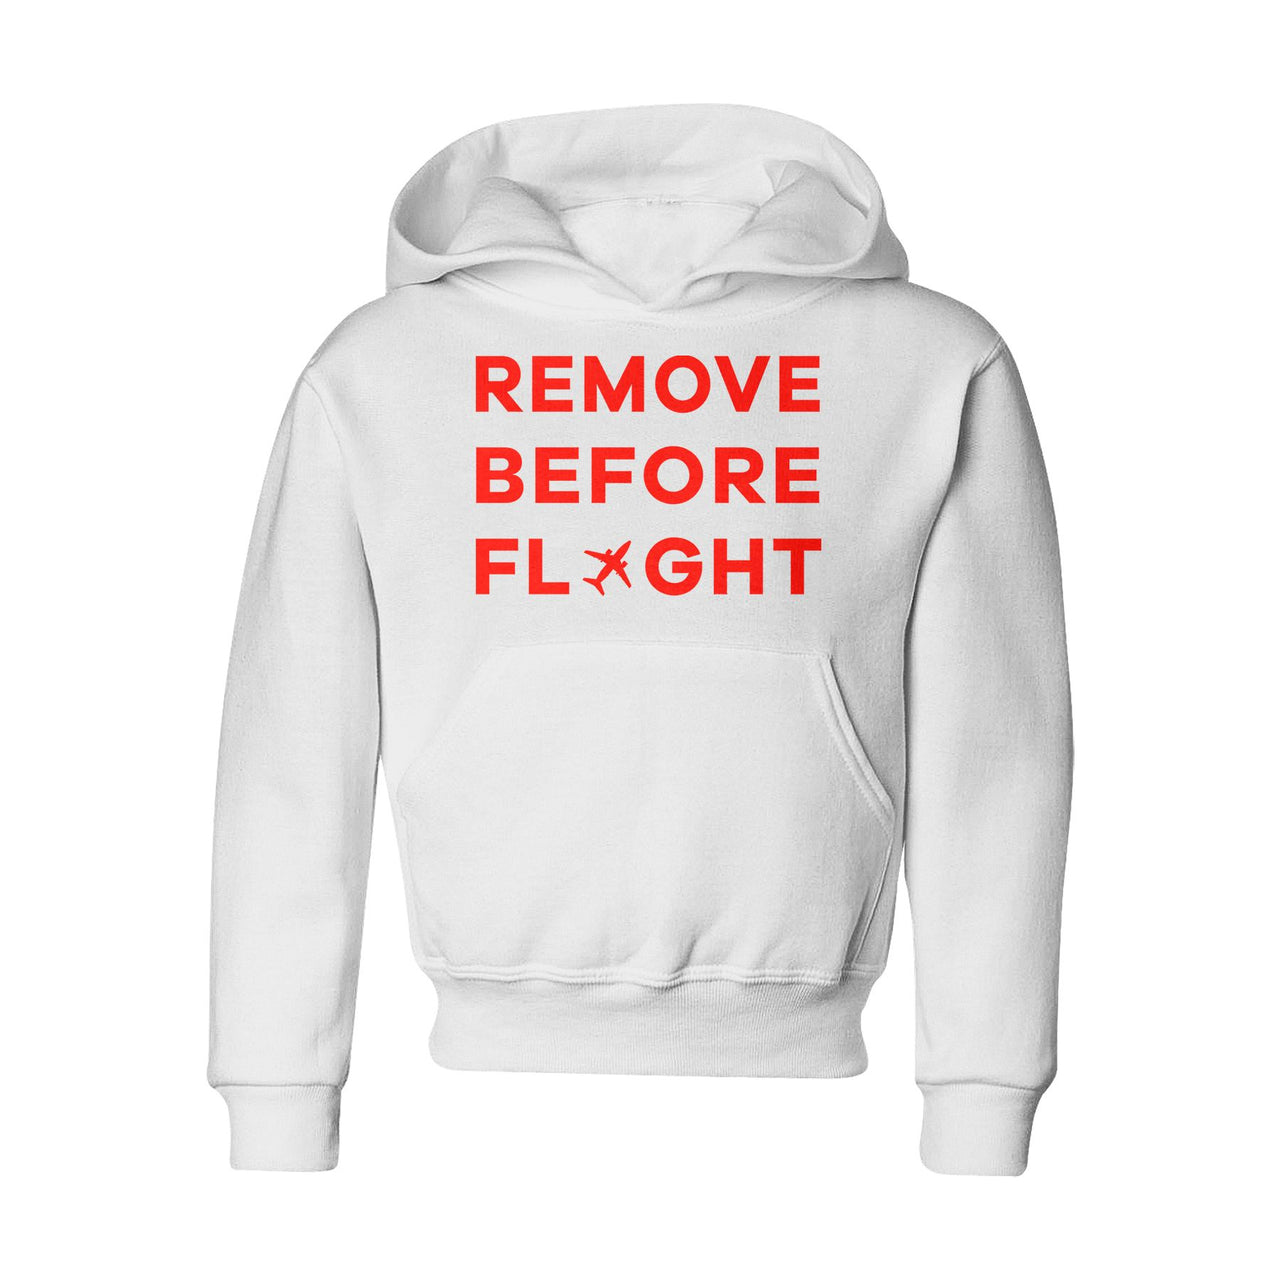 Remove Before Flight Designed "CHILDREN" Hoodies